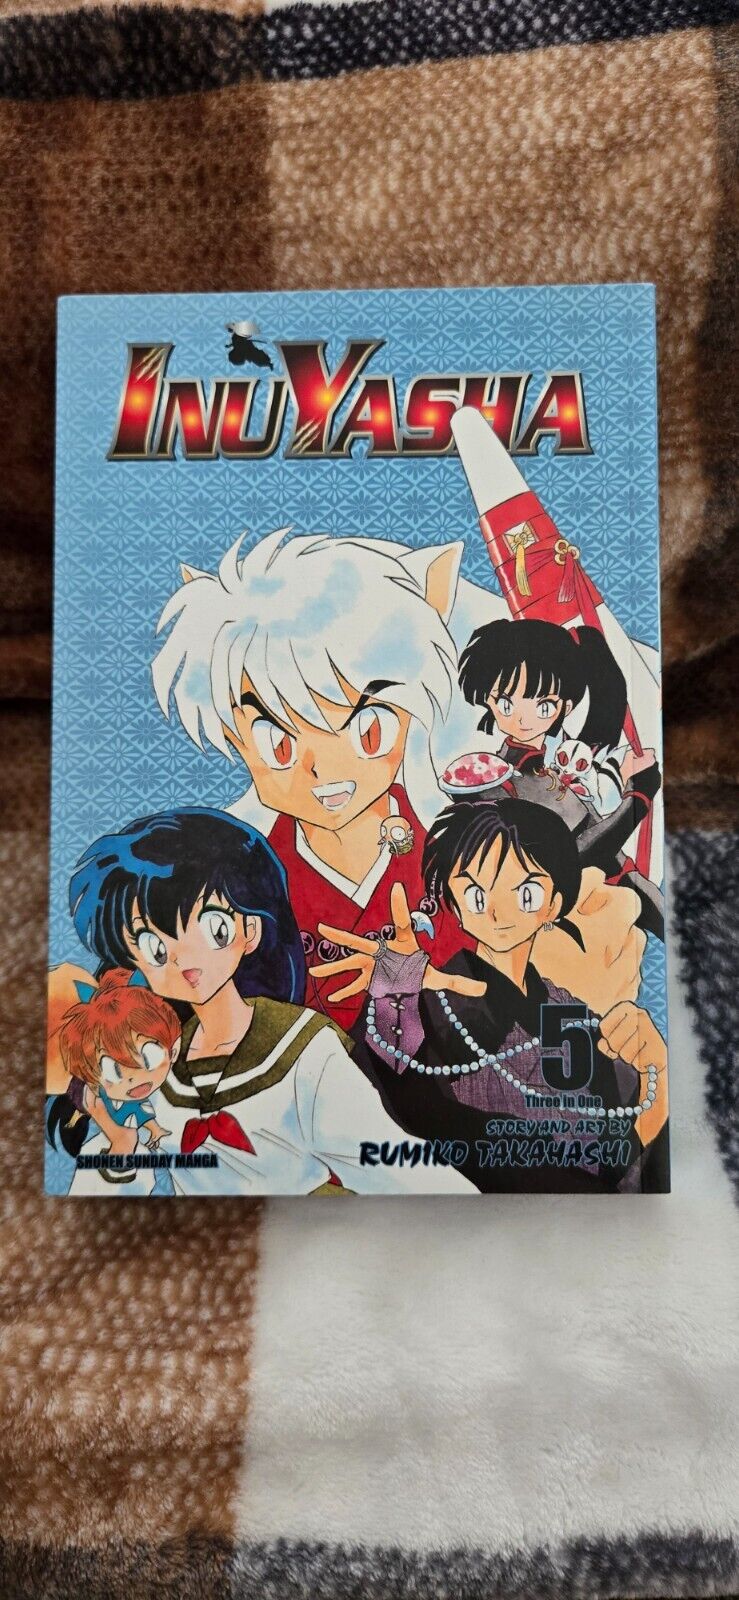 Inuyasha 3 in 1 Manga Vol 5 by Rumiko Takahashi